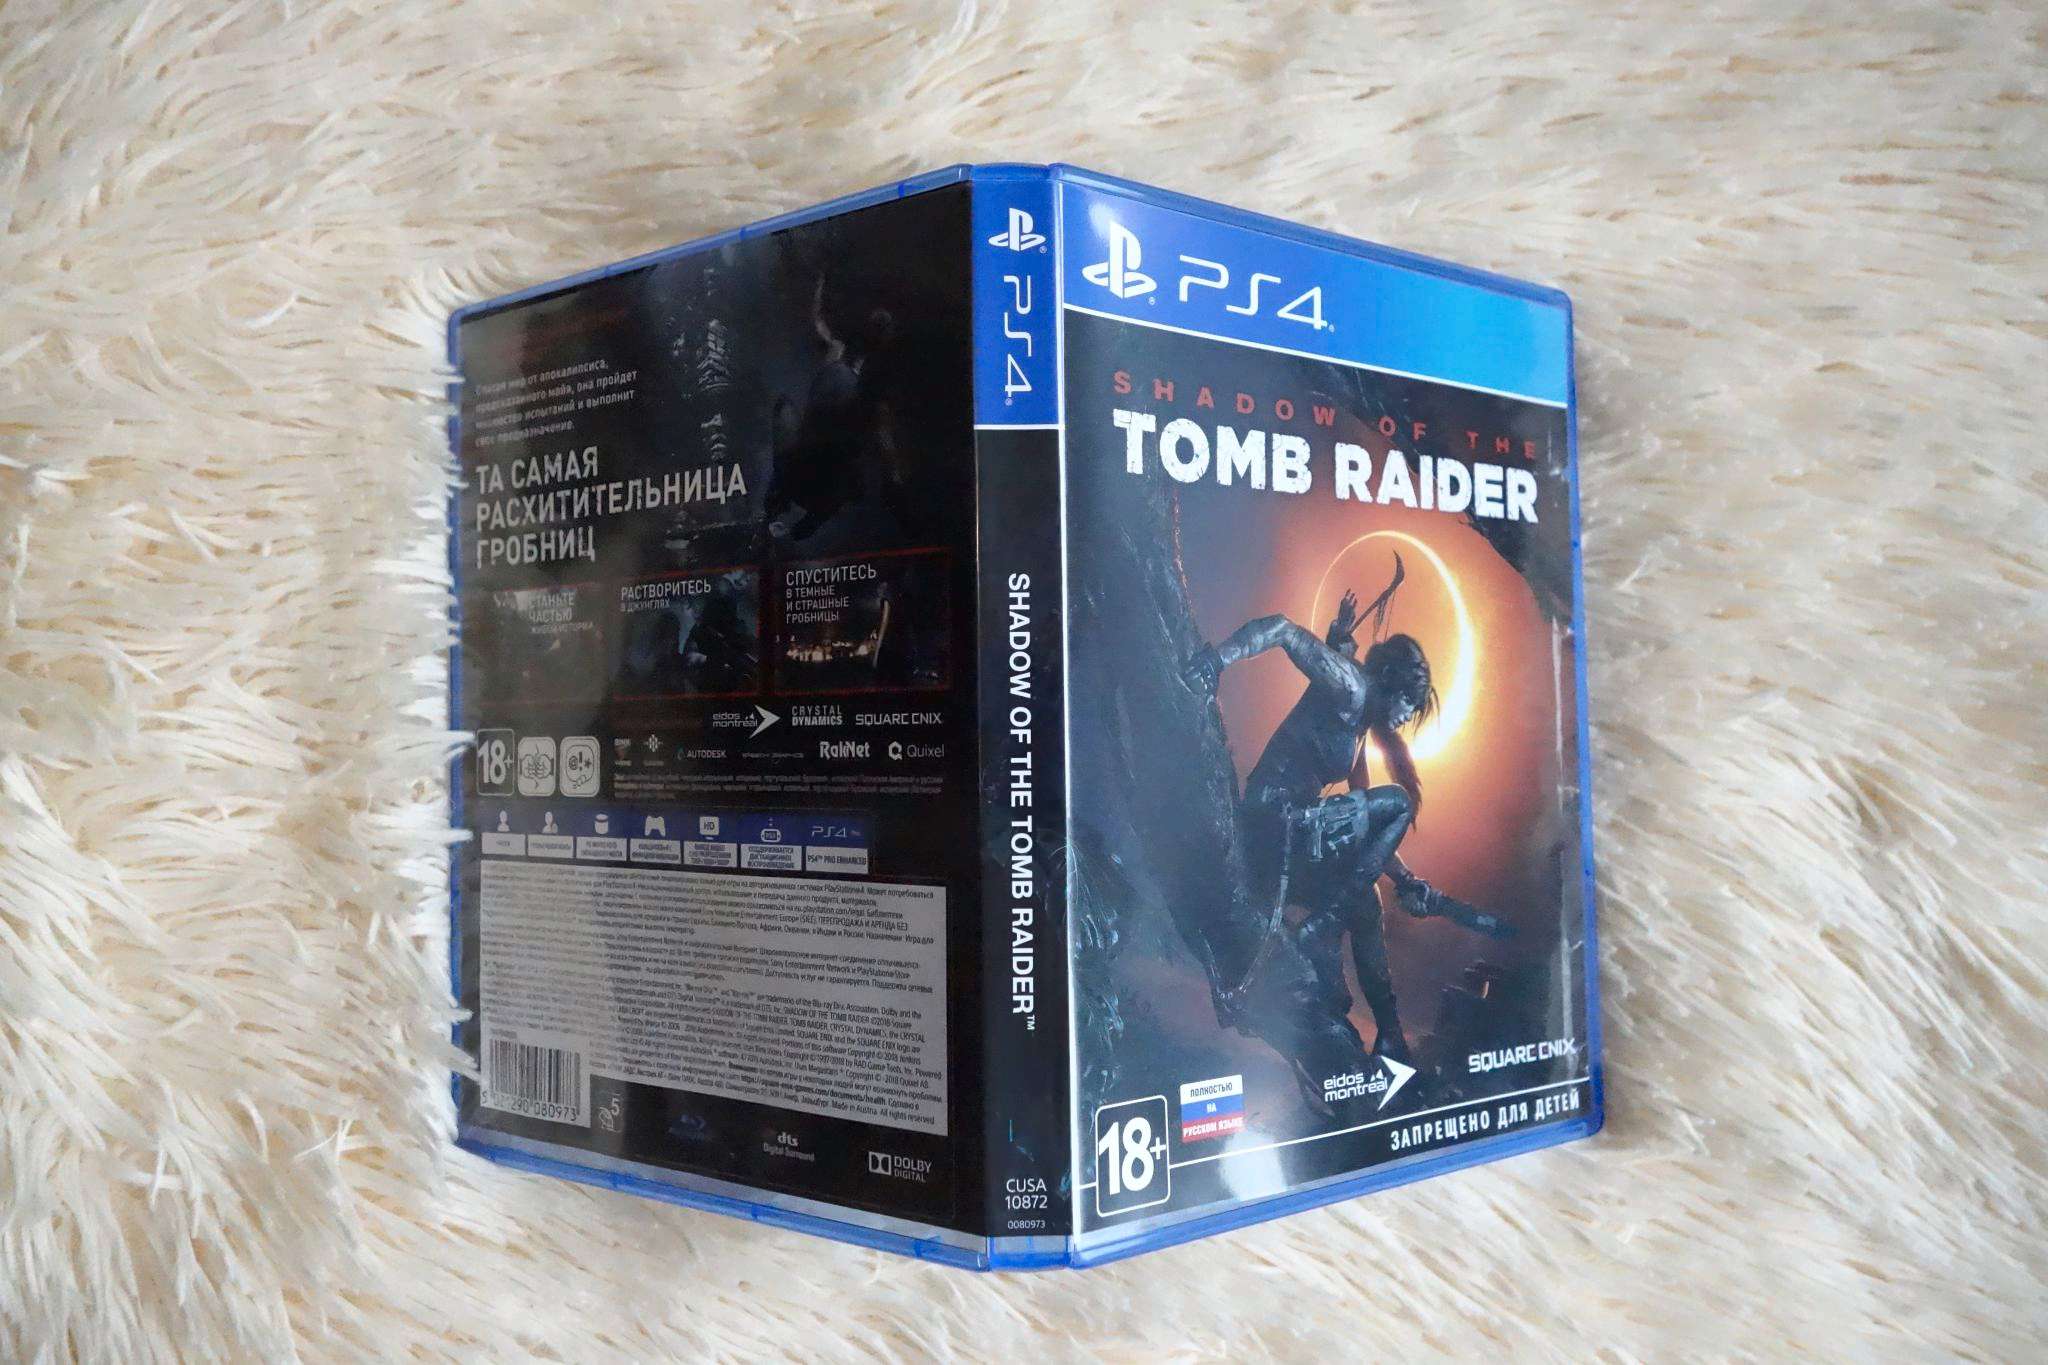 Contra galuga ps4. Shadow of the Tomb Raider ps4. Cusa ps4. Игра Shadow of the Tomb Raider коды на ps4. Код Cusa.